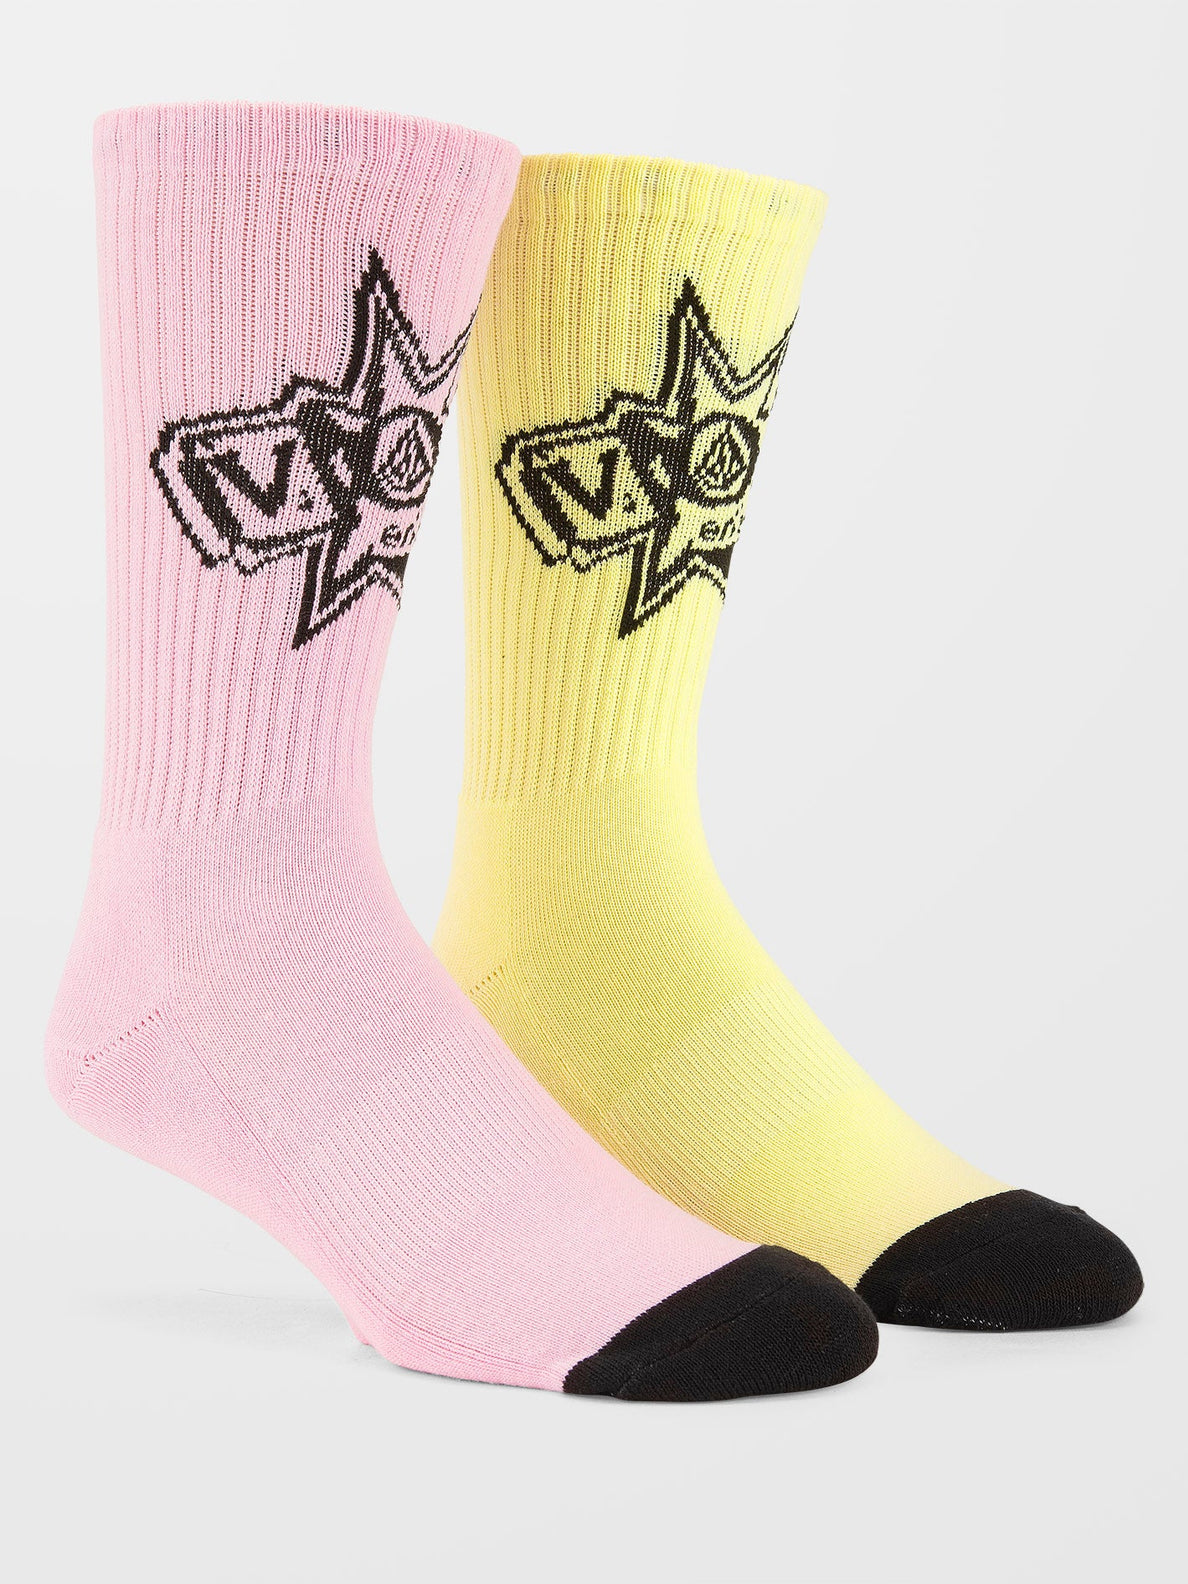 Volcom V Ent Socke Premium Reef Pink | Meistverkaufte Produkte | Neue Produkte | Neueste Produkte | surfdevils.com